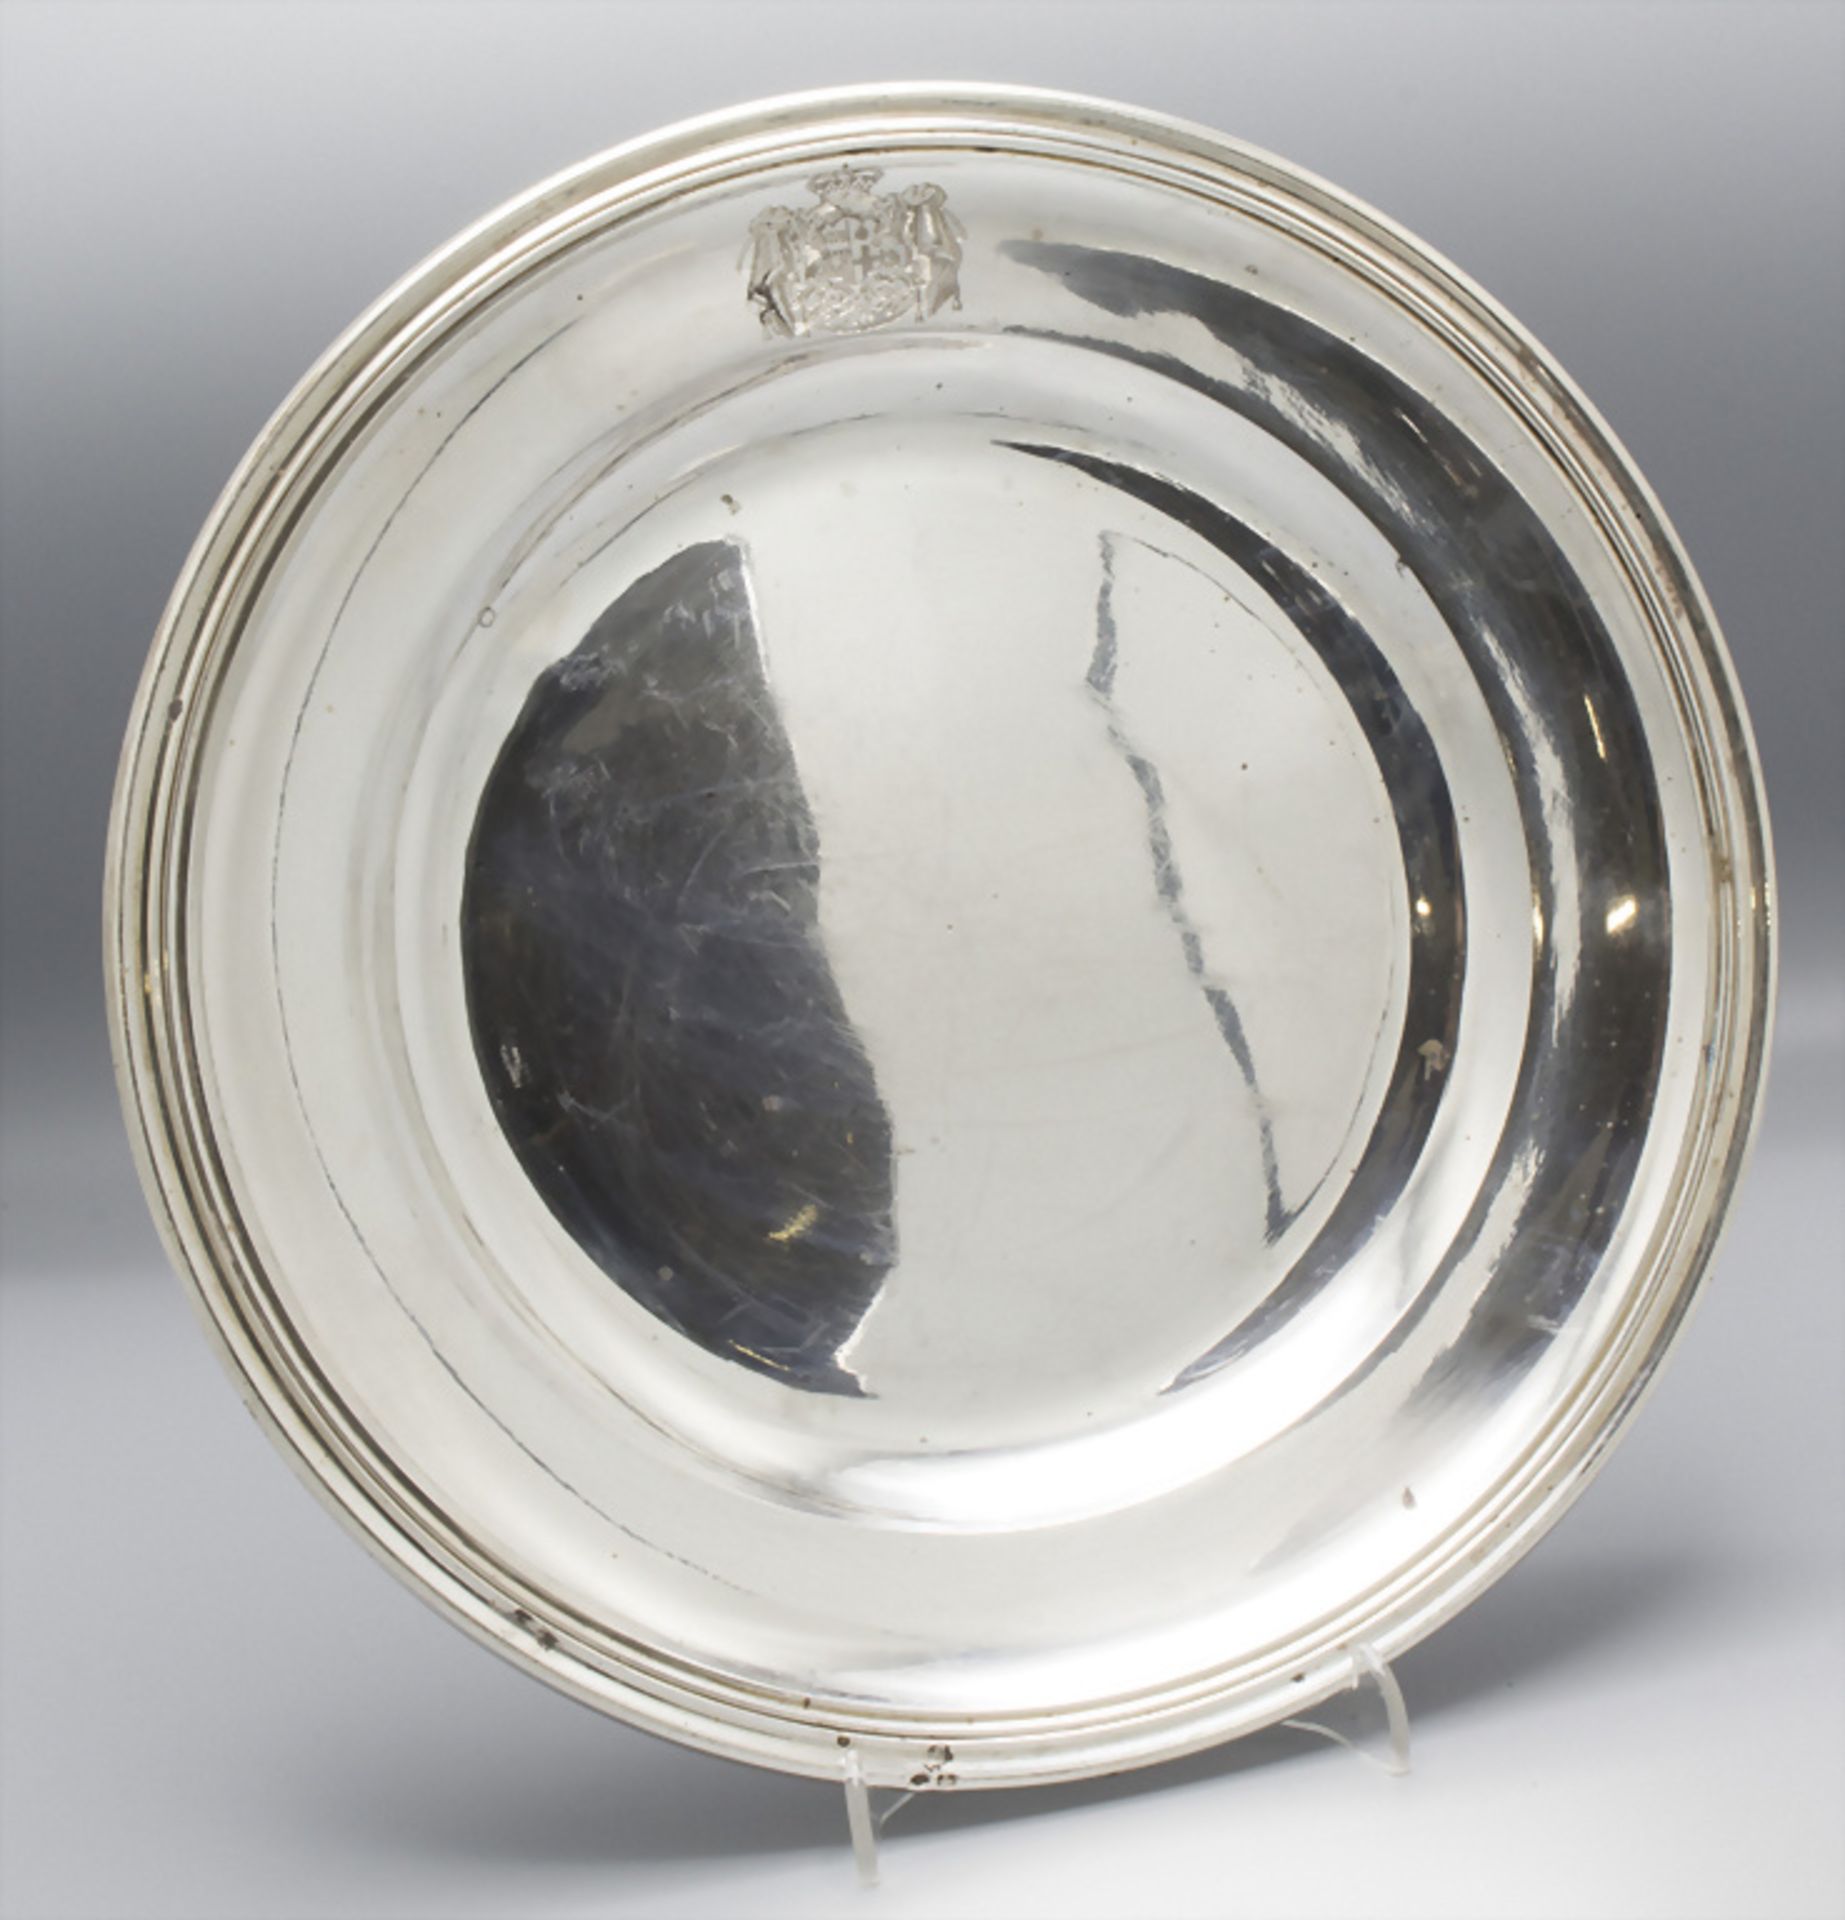 12 Silberteller / 12 assiettes en argent massif / A set of 12 silver plates, Odiot, Paris, um 1870 - Image 28 of 29